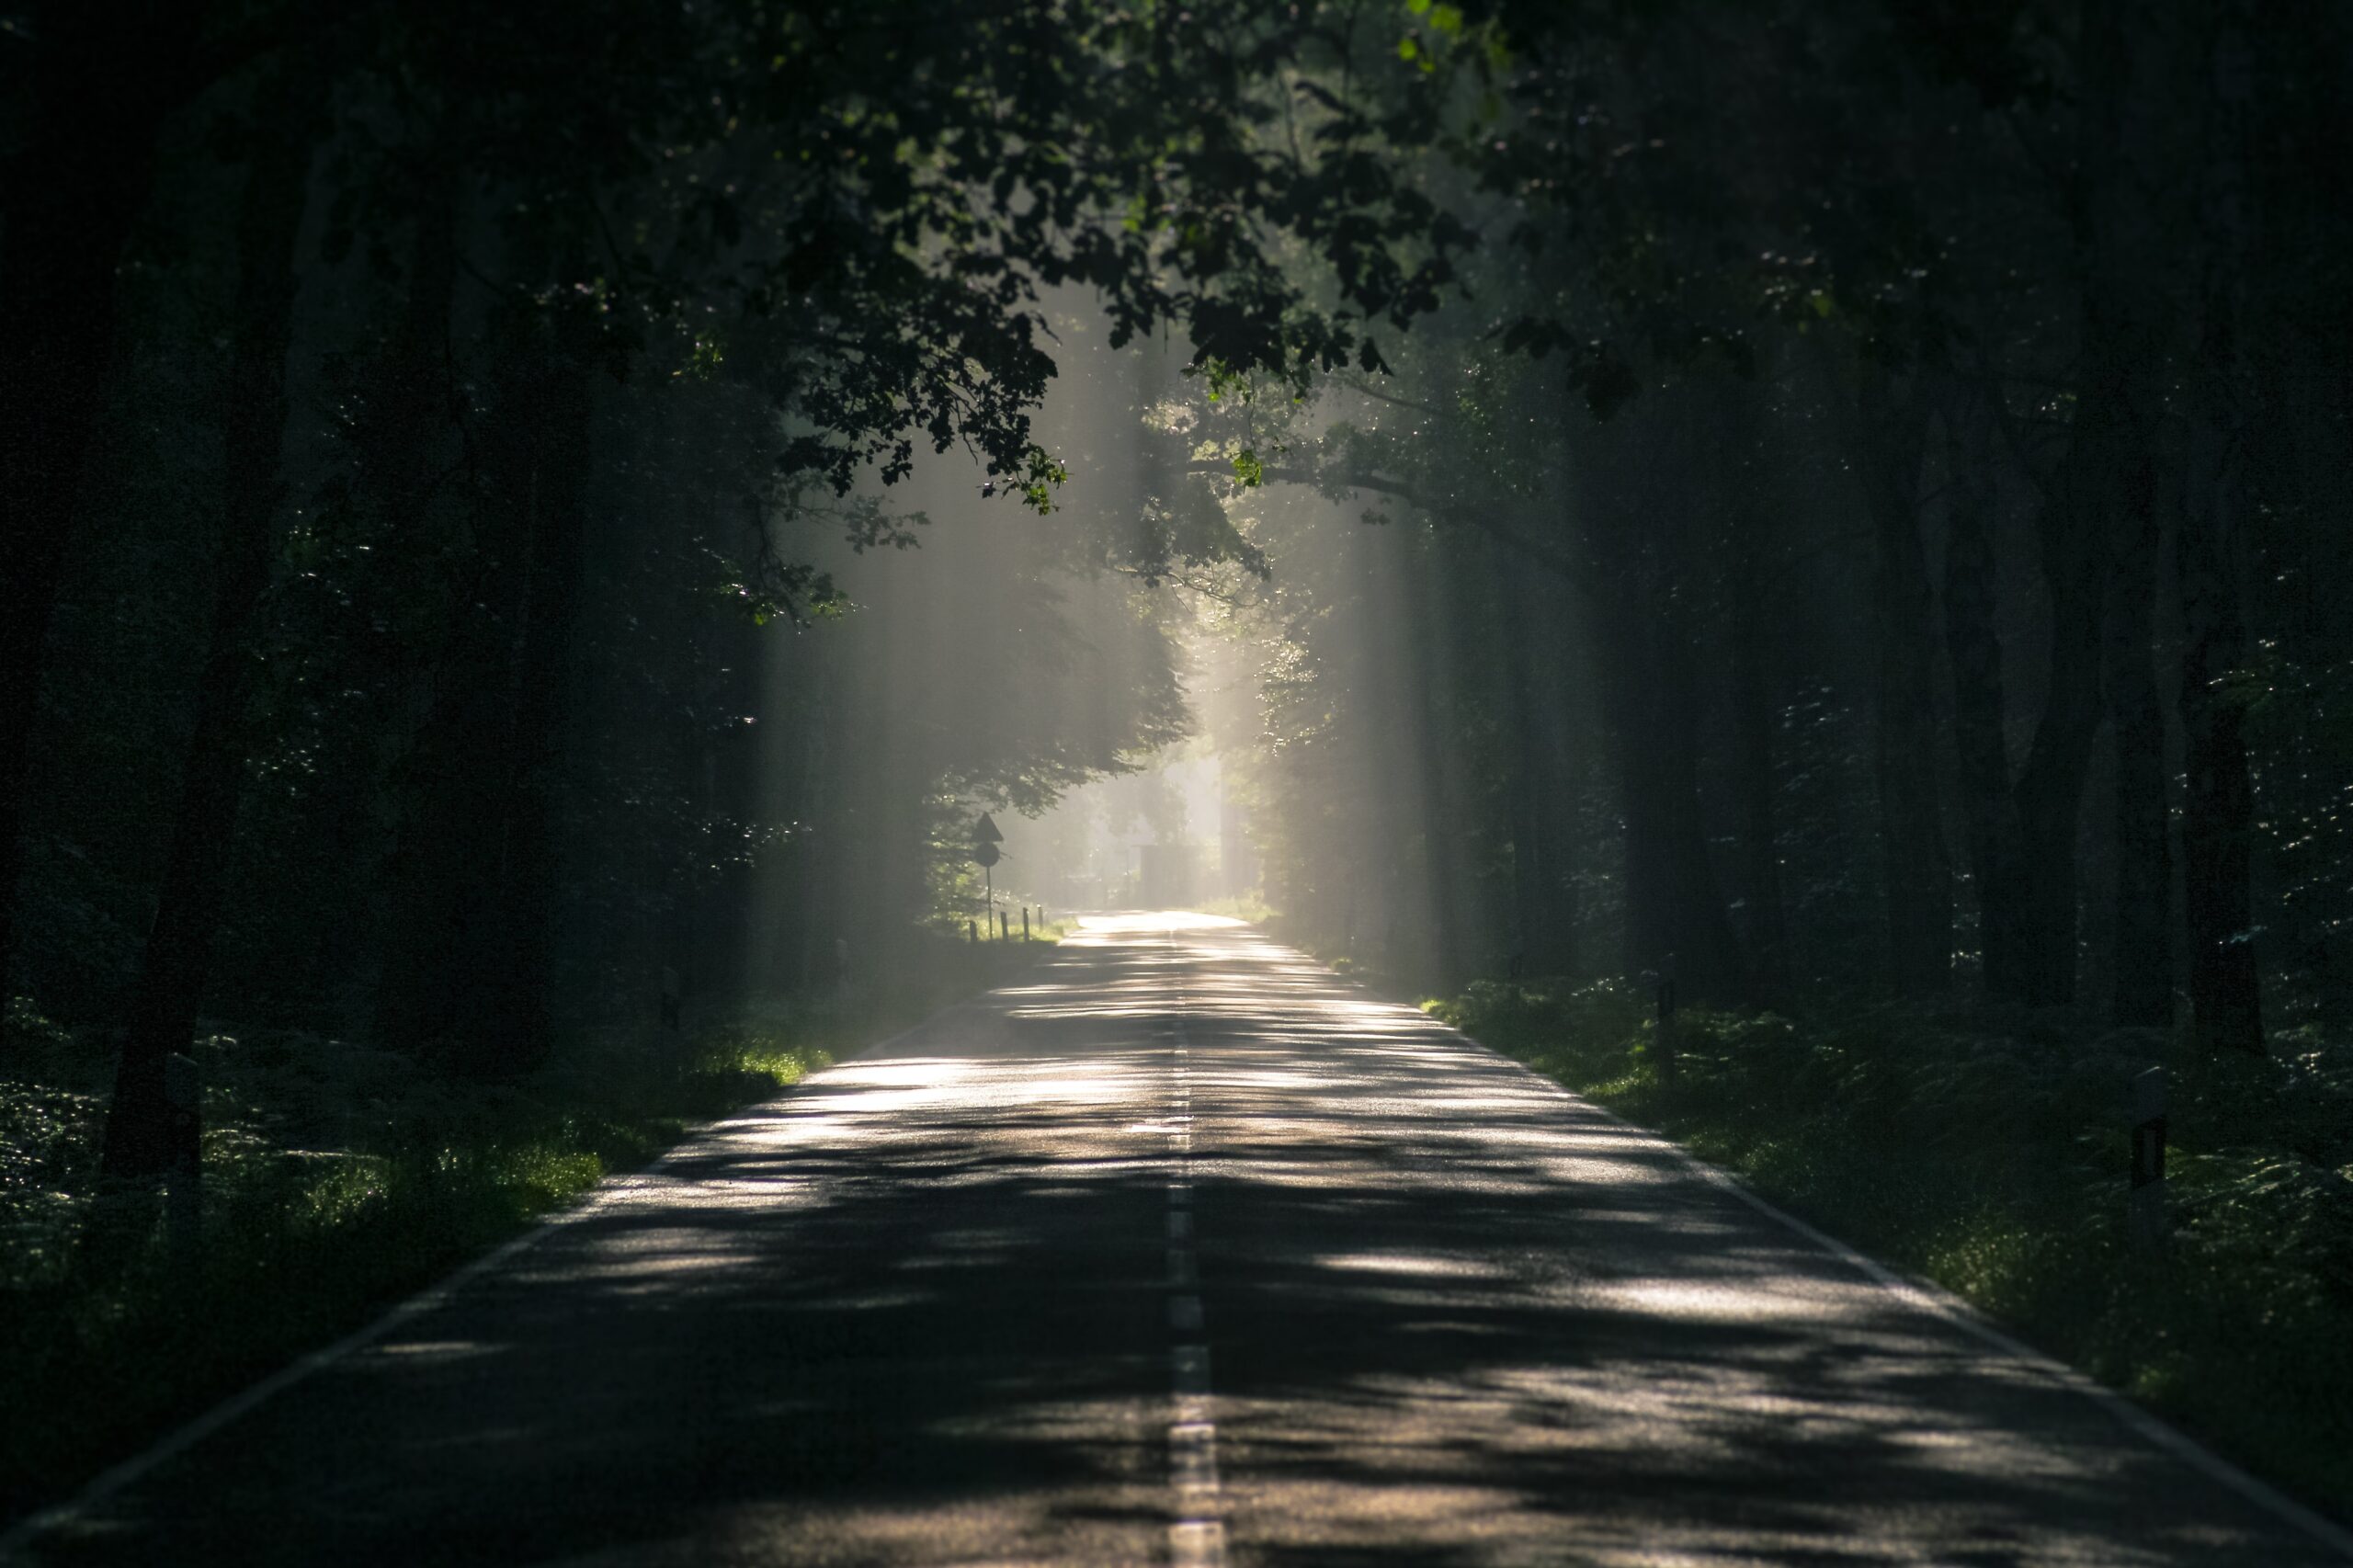 a road cuts through a dark forest